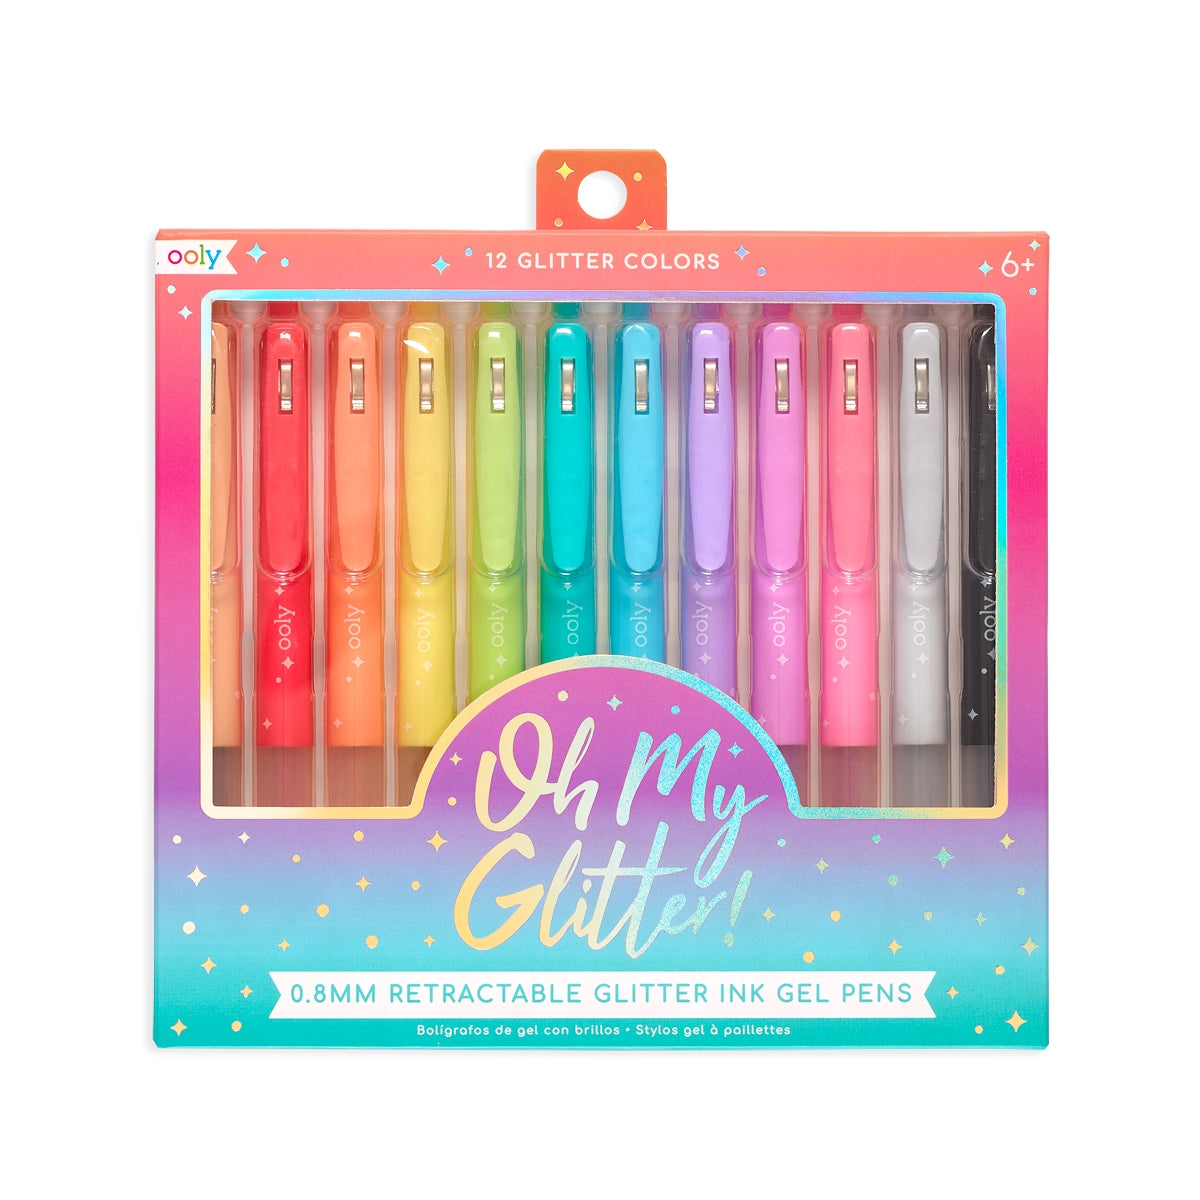 retractable glitter gel pens